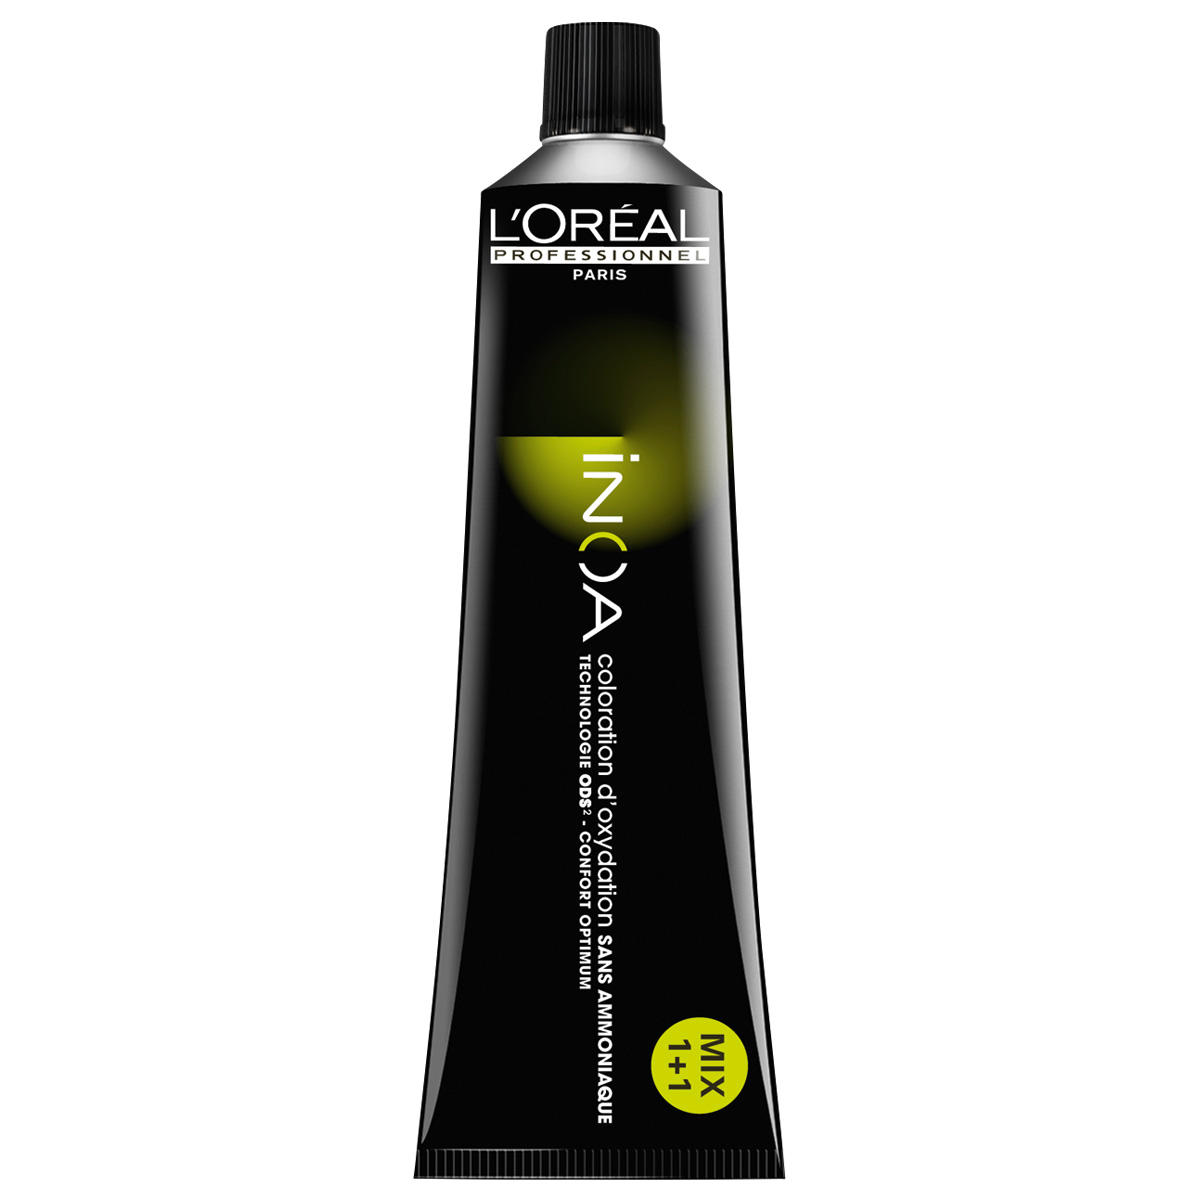 L'Oréal Professionnel Paris Coloration 10.21 Cenere Irisé biondo platino, tubo 60 ml